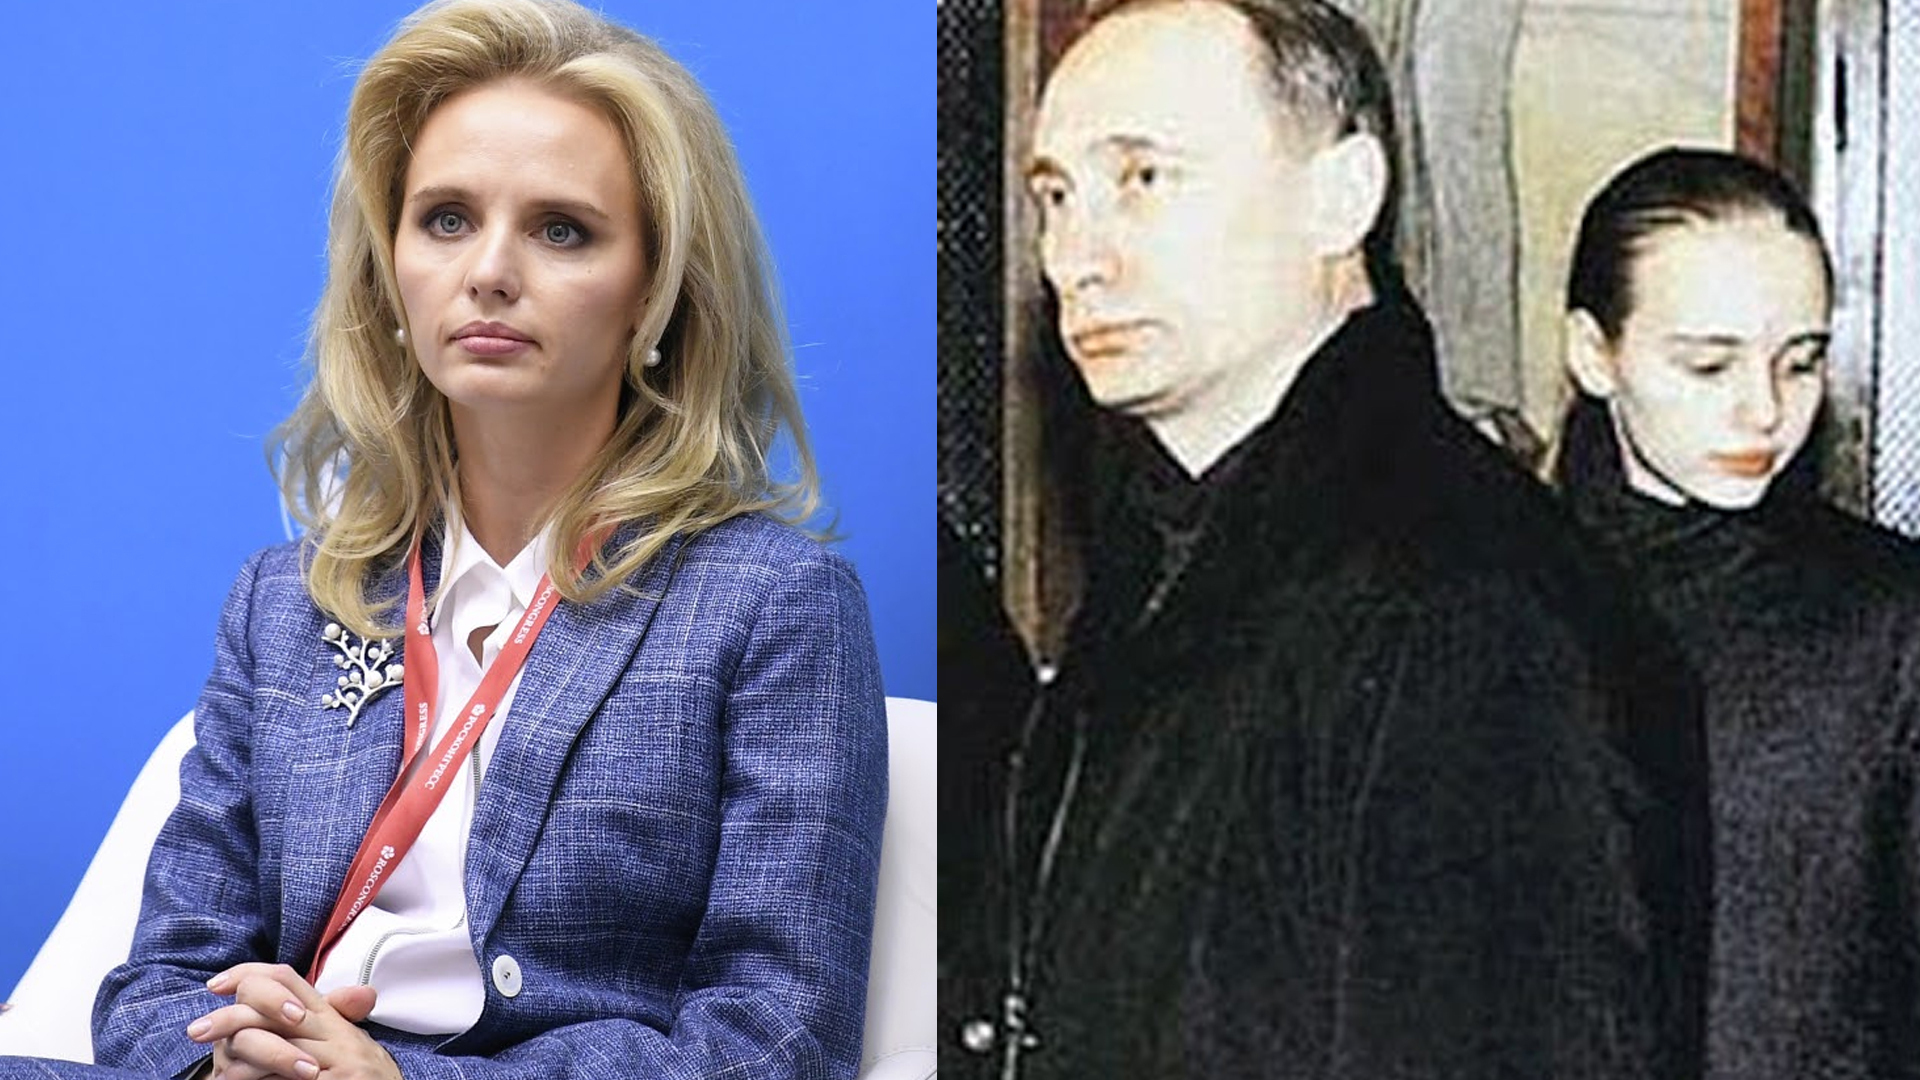 дочь президента россии фото